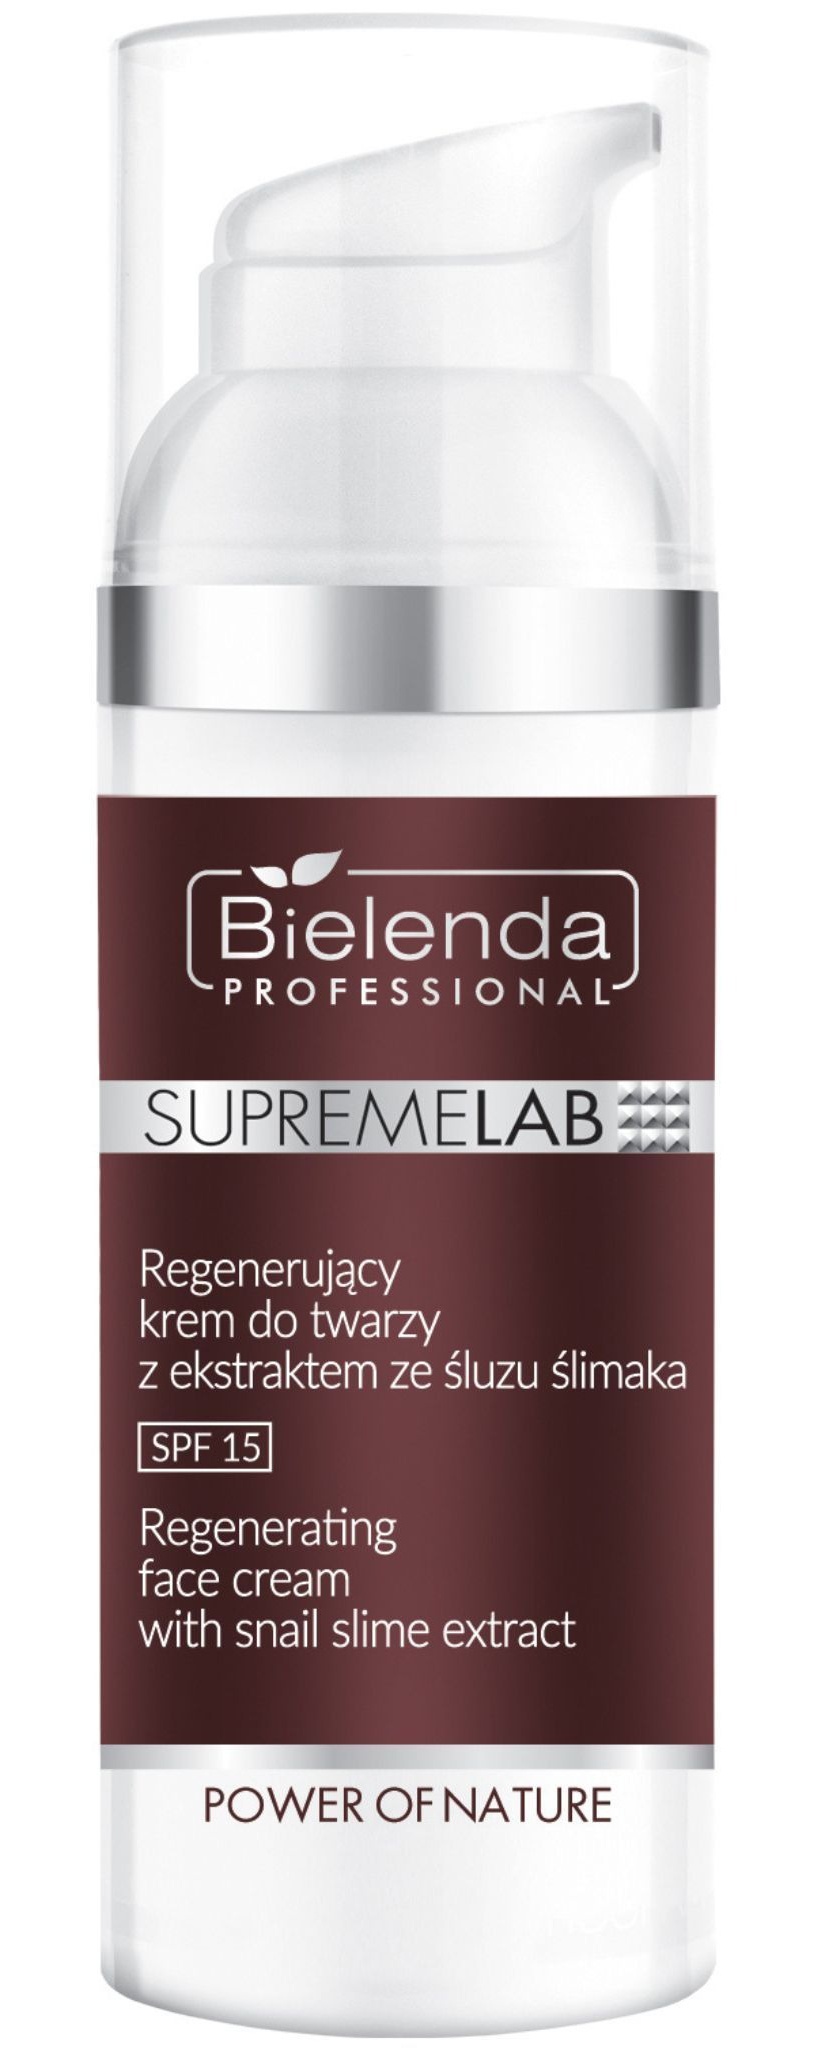 Bielenda Professional Supremelab Power Of Nature Regenerating Face Cream